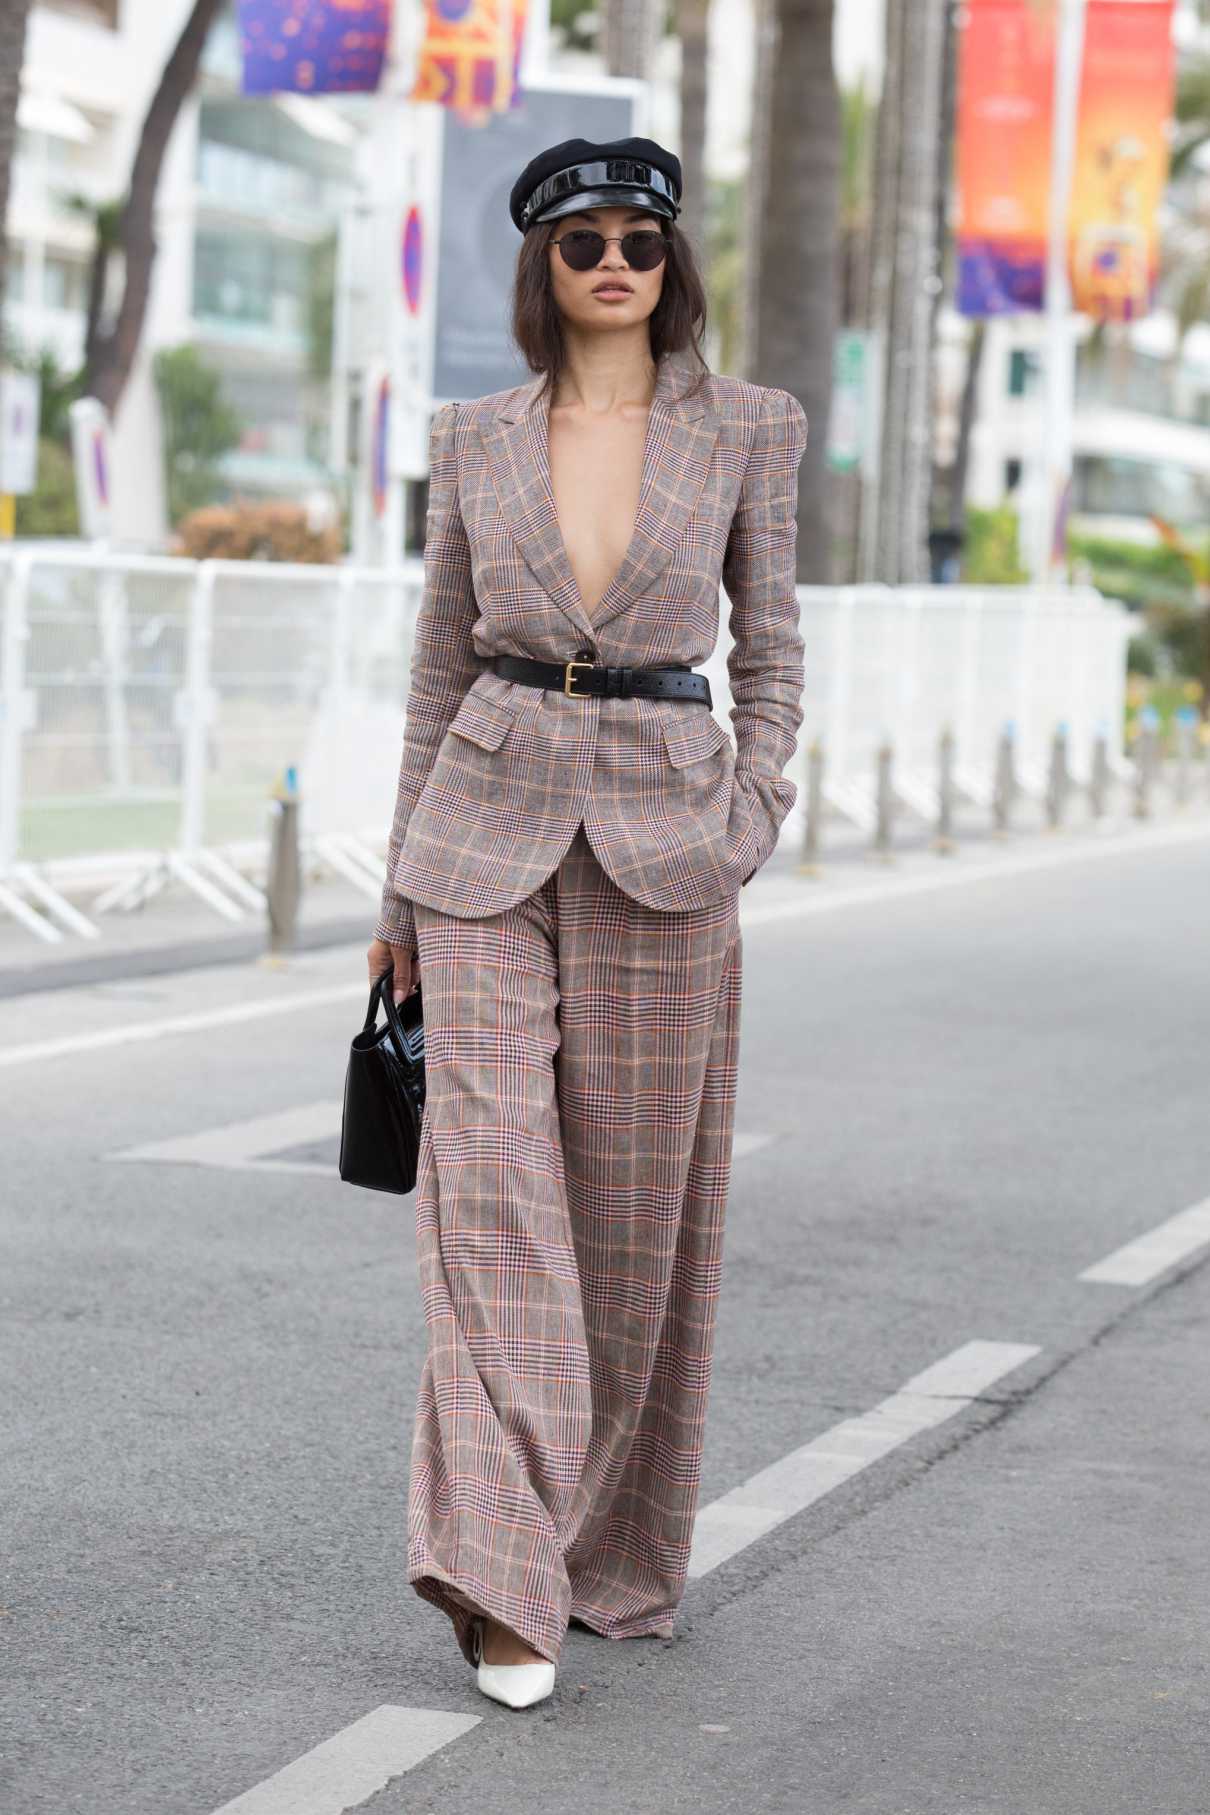 Shanina Shaik in a Plaid Suit